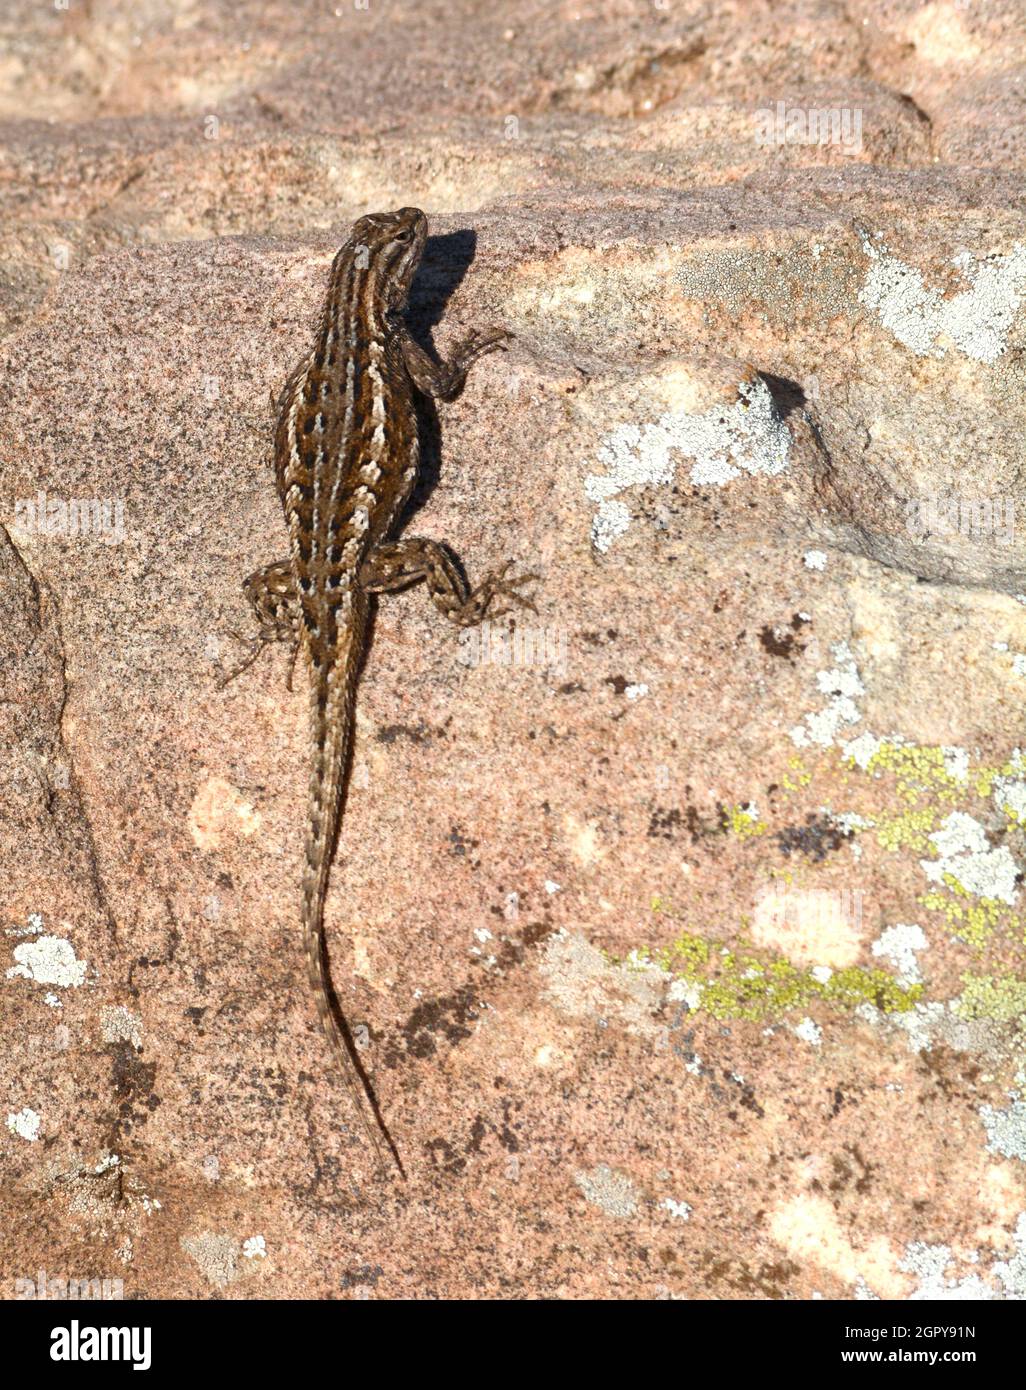 A sagebrush lizard (Sceloporus gracious) soaks up the warming sun on a rock in New Mexico. Stock Photo